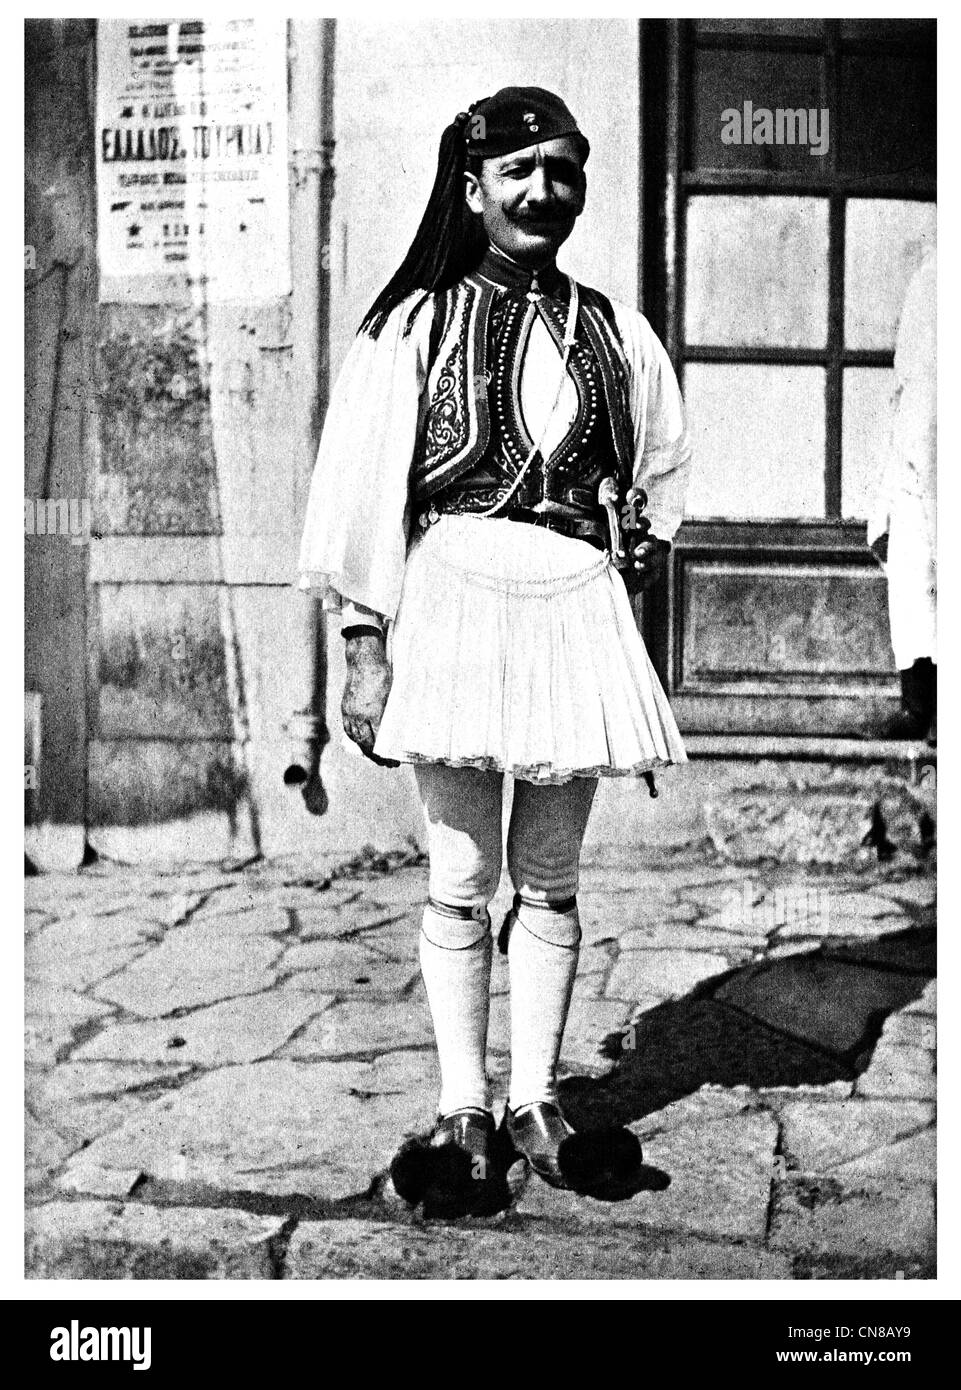 First published 1915 Albania Costume Fustanella dress. Kavass armed police  Qeleshe hat Stock Photo - Alamy